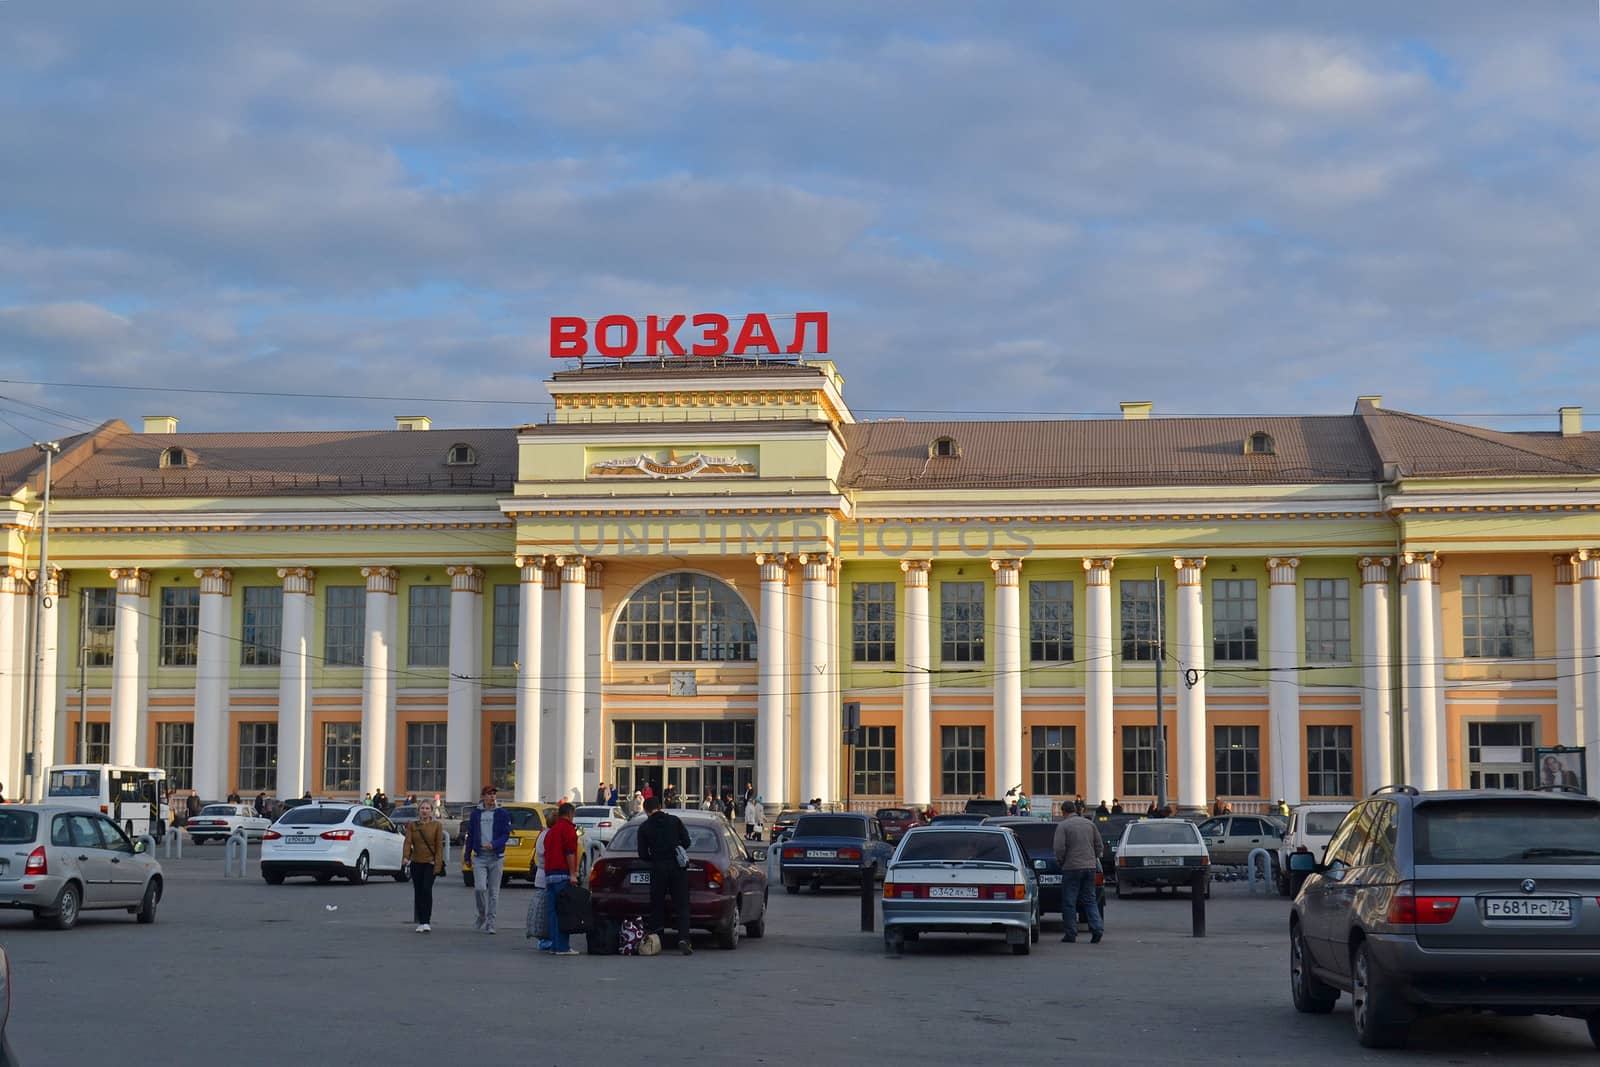 Railway station of Yekaterinburg. by veronka72